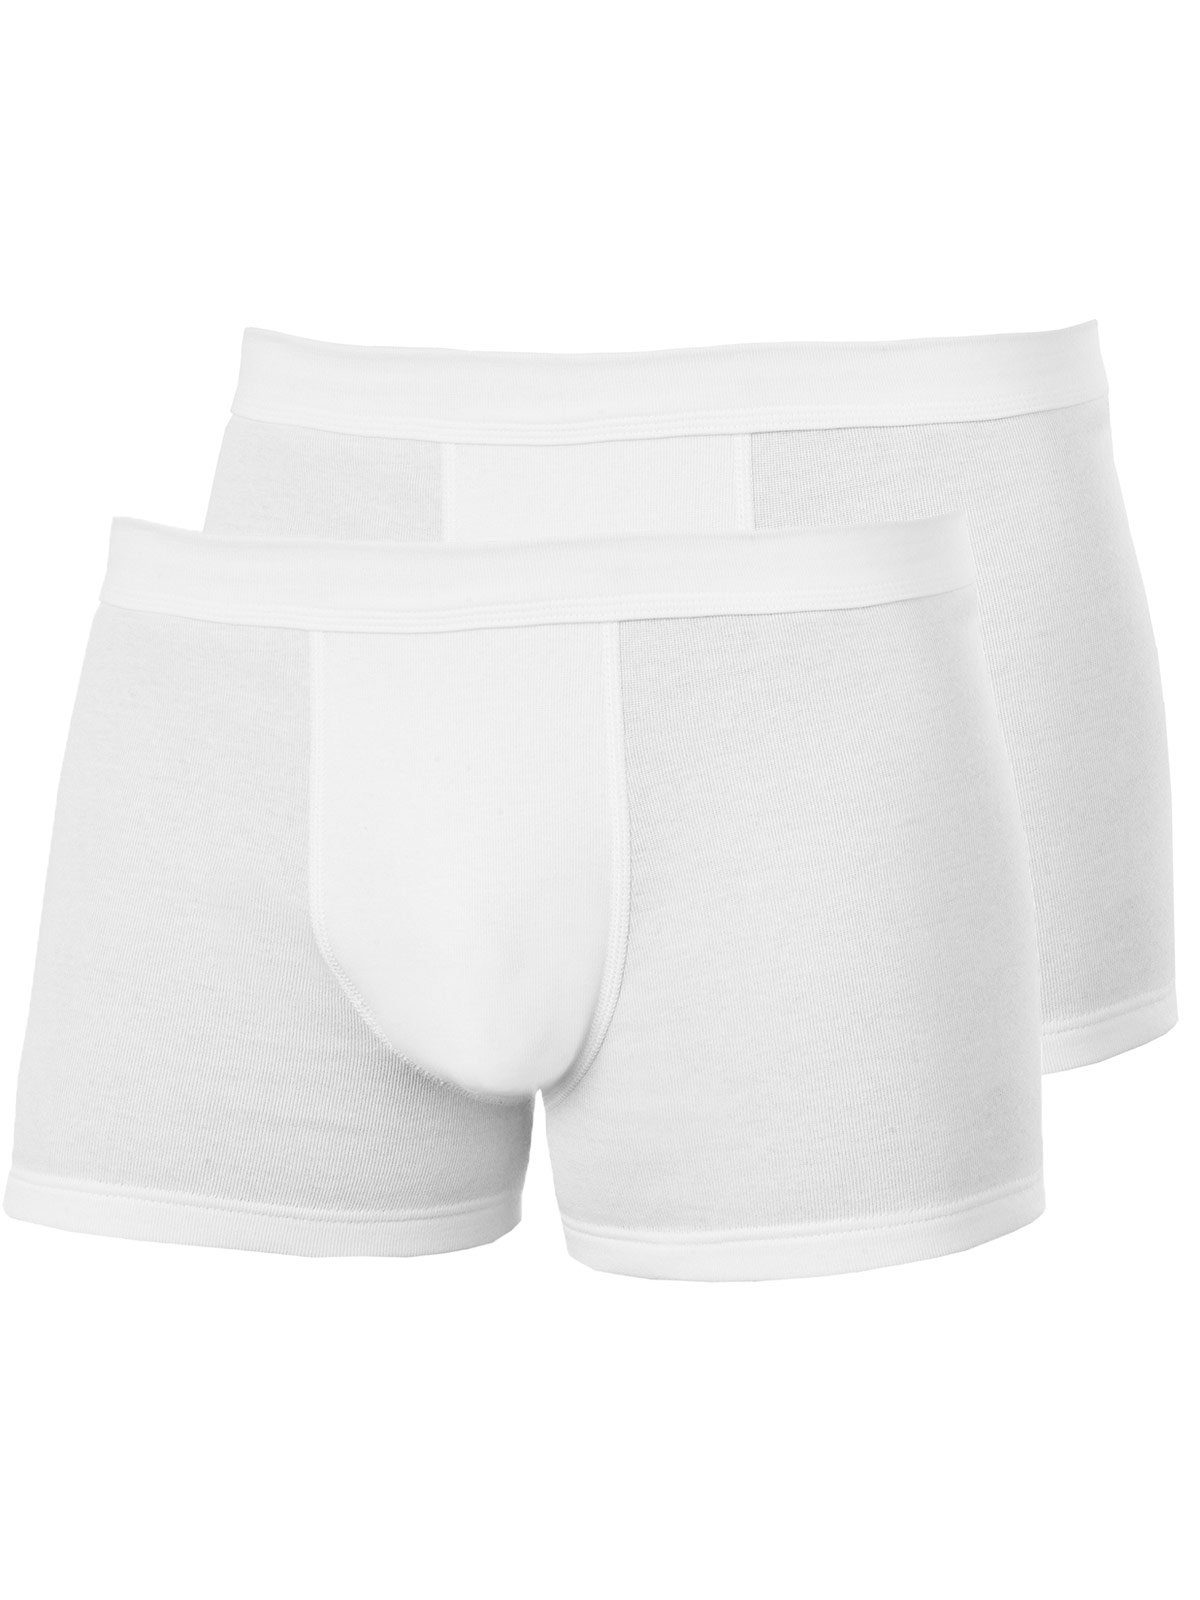 Pants Herren Bio Pants Cotton Pack (Packung, 2er KUMPF - 2-St) Retro